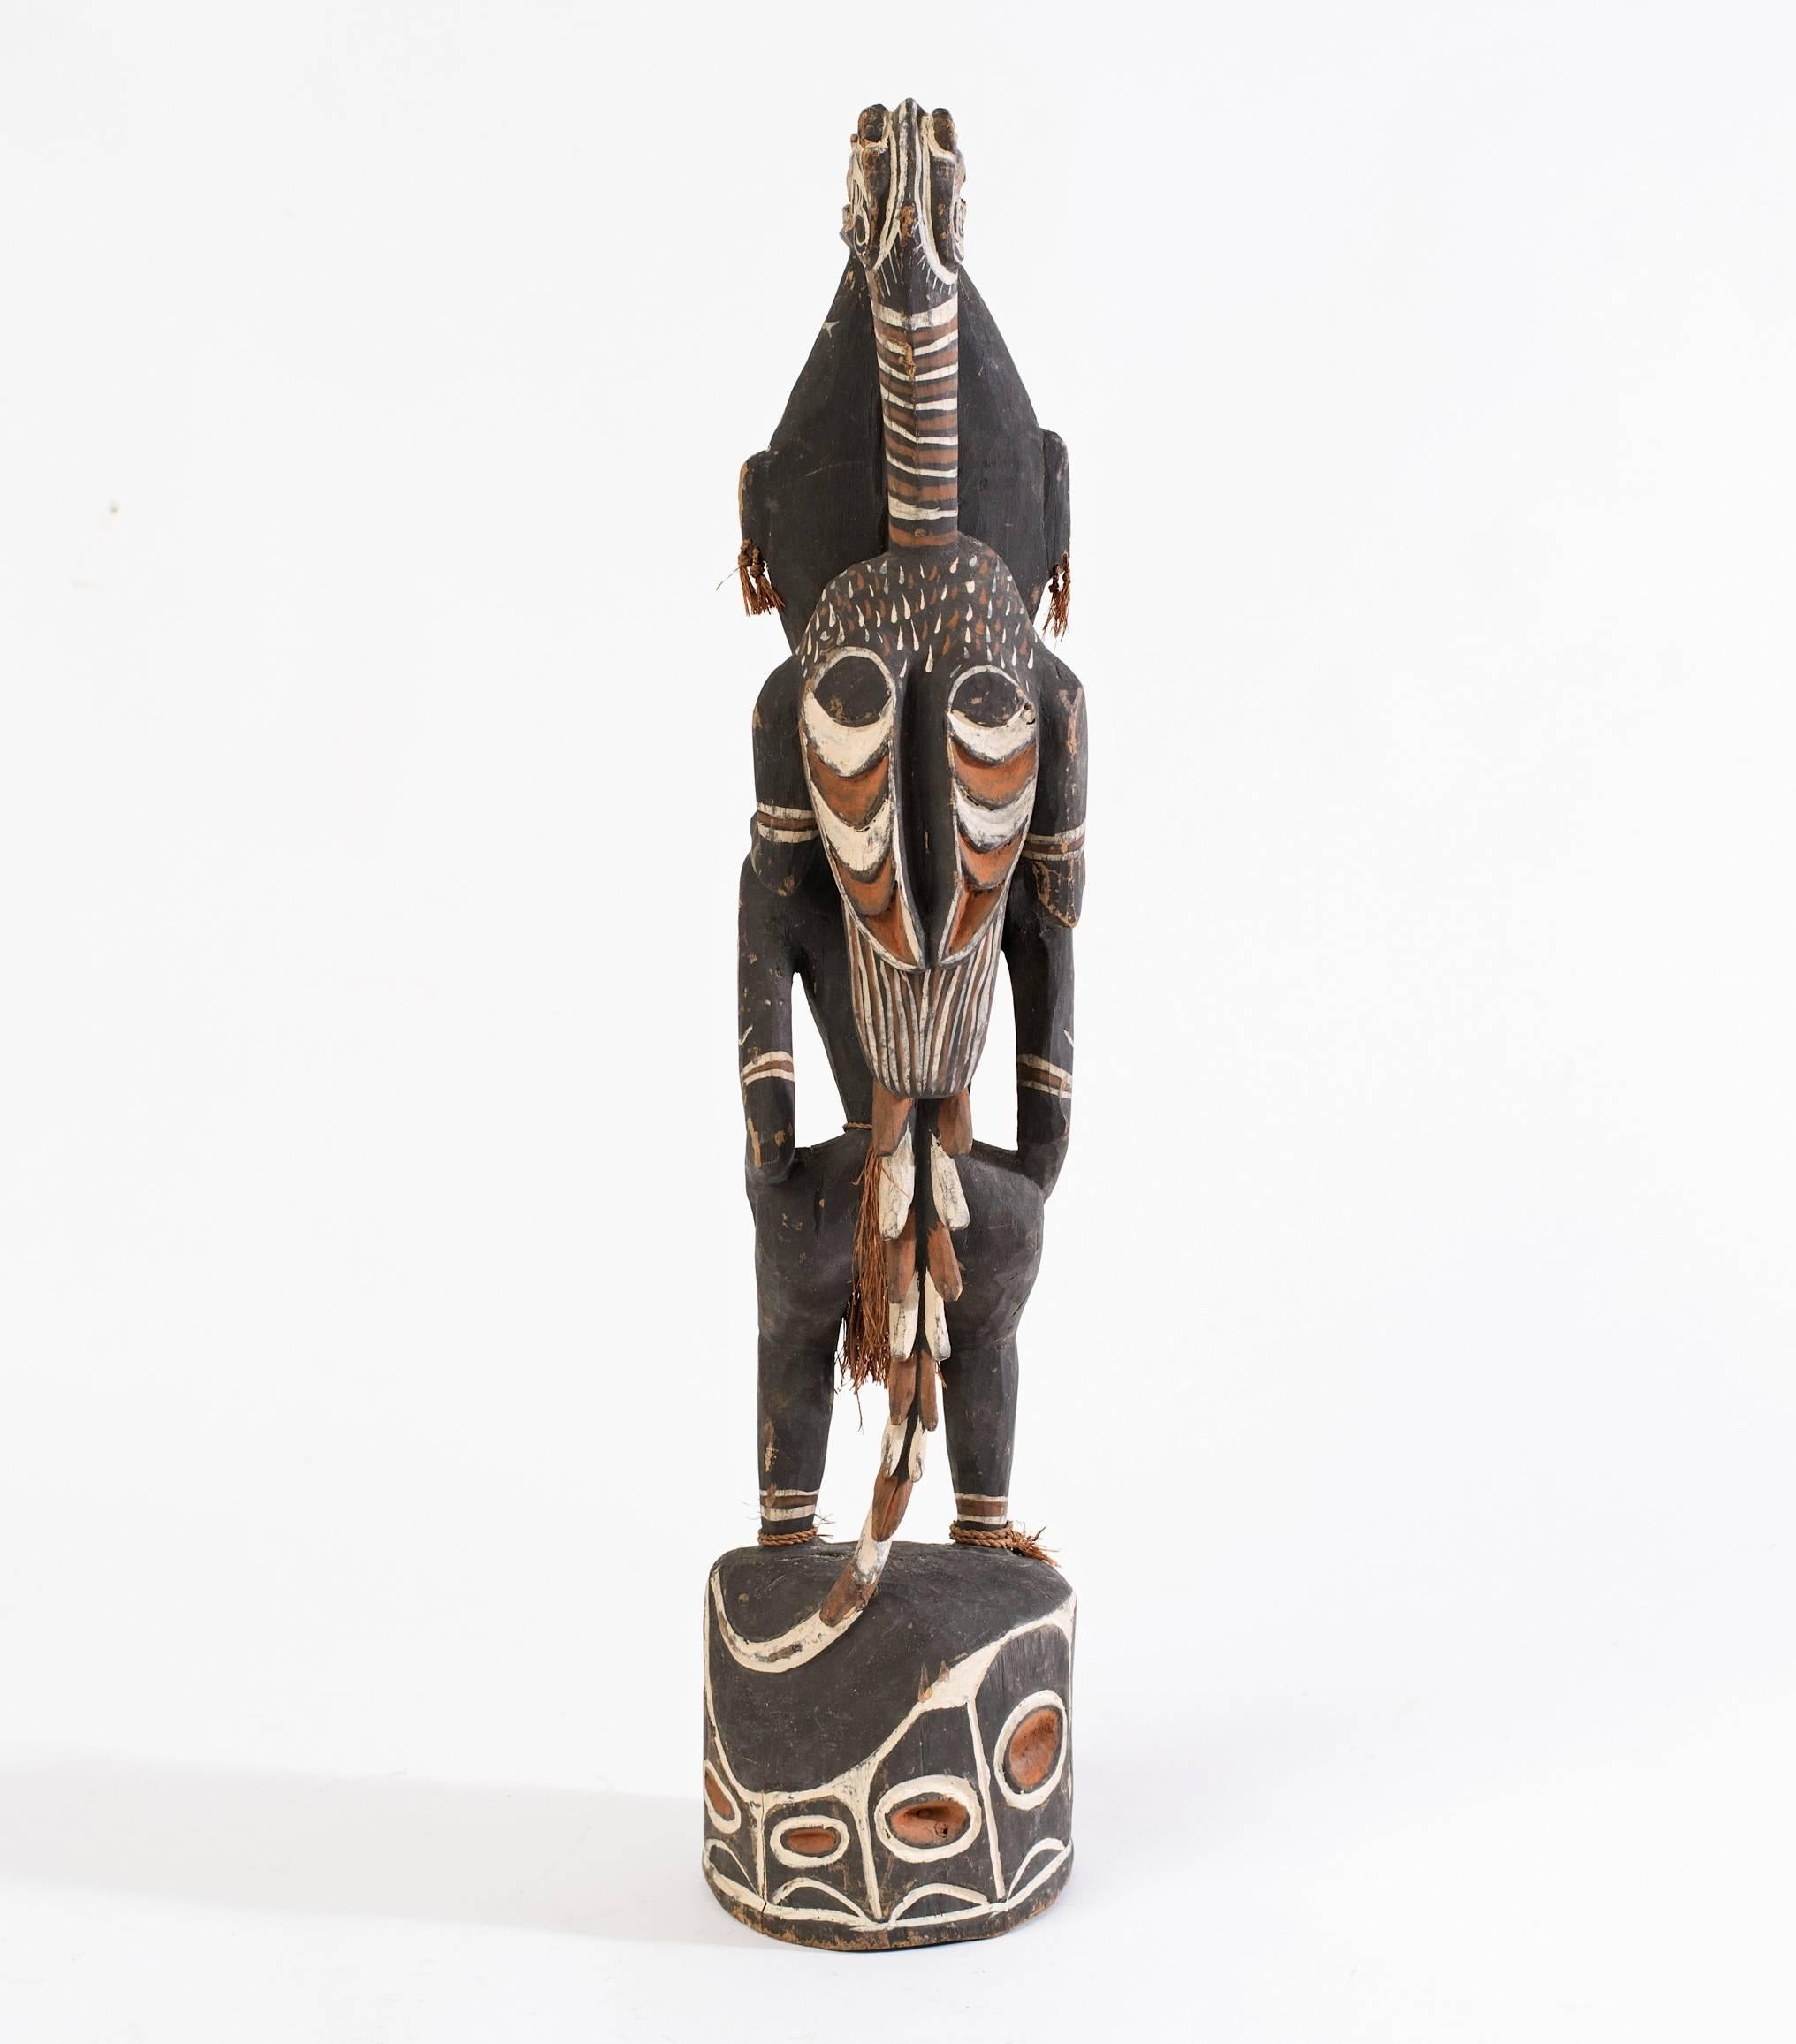 Wood Oceanic Sepik River Gable Figure Sculpture from Papua, New Guinea